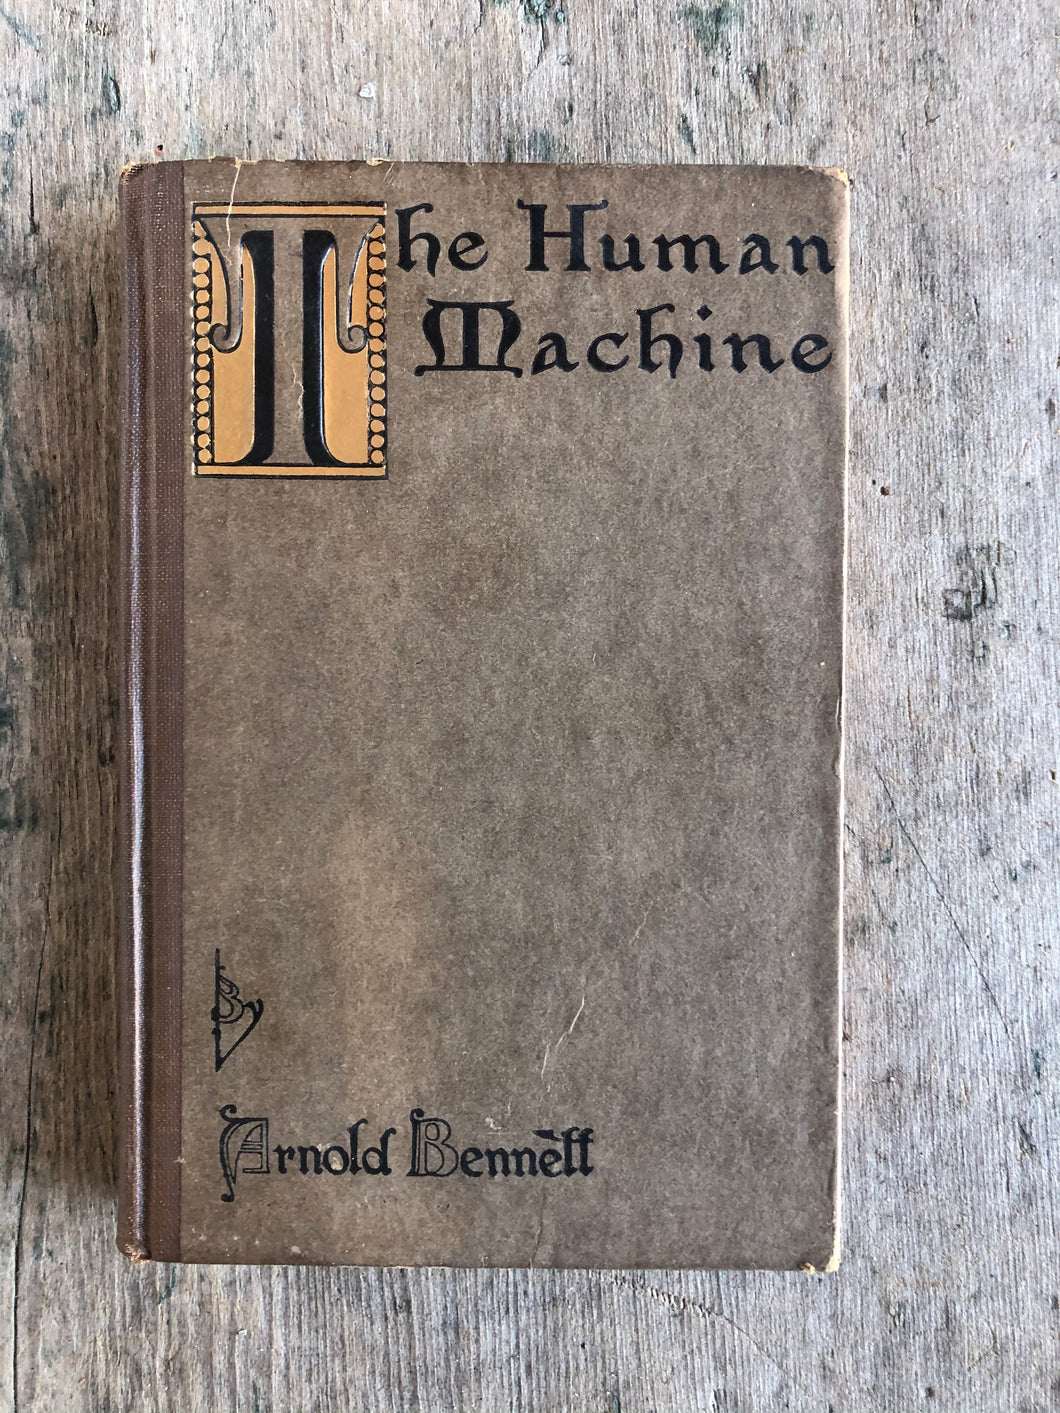 The Human Machine by Arnold Bennett